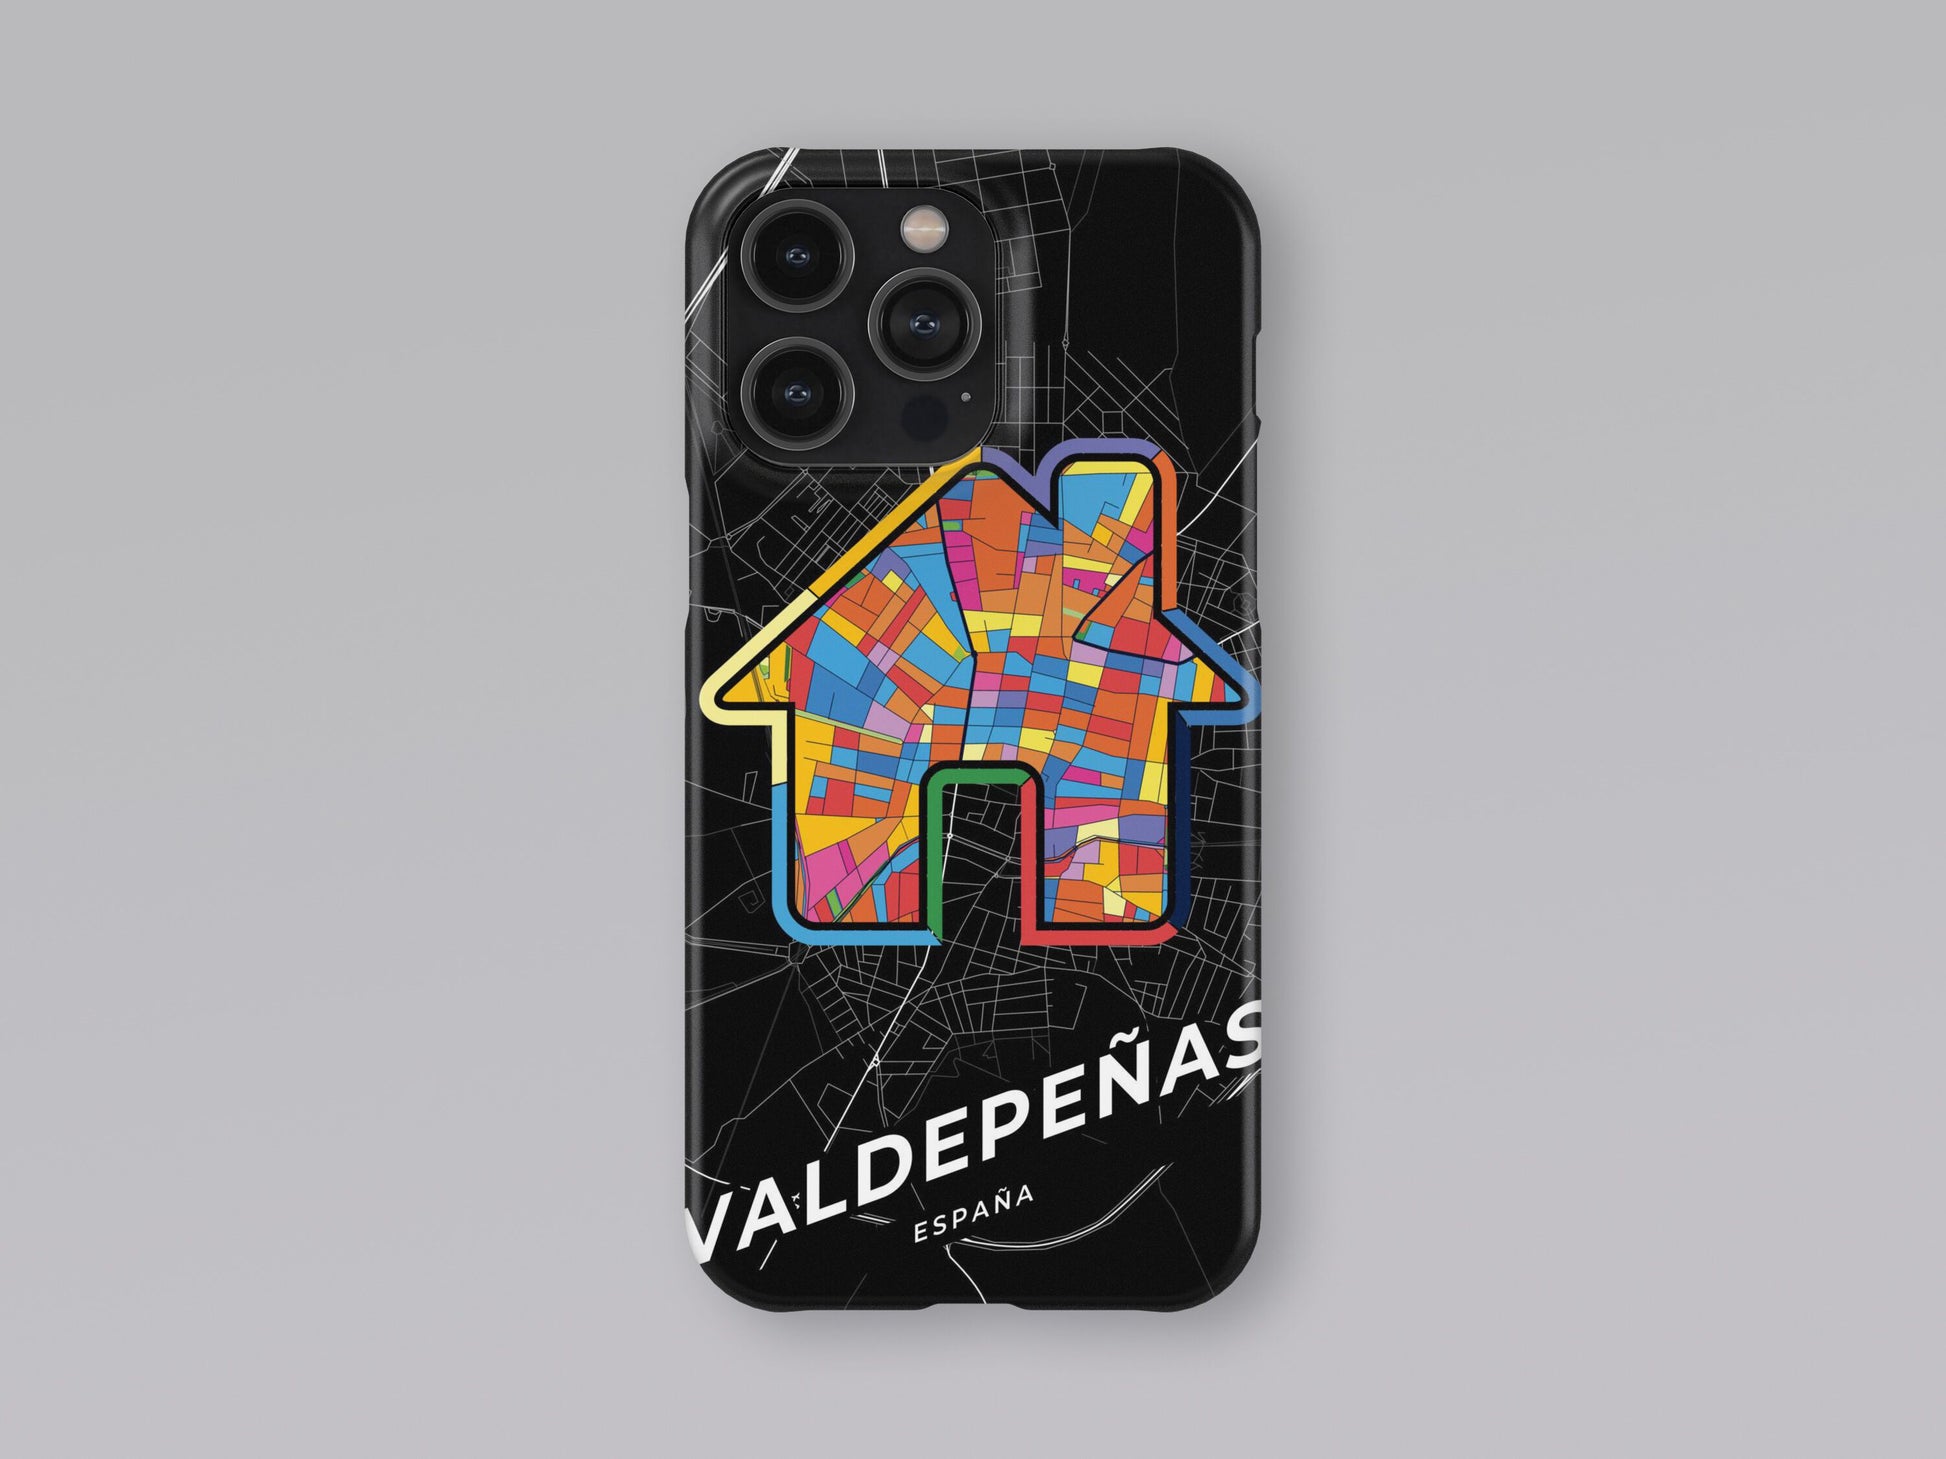 Valdepeñas Spain slim phone case with colorful icon 3